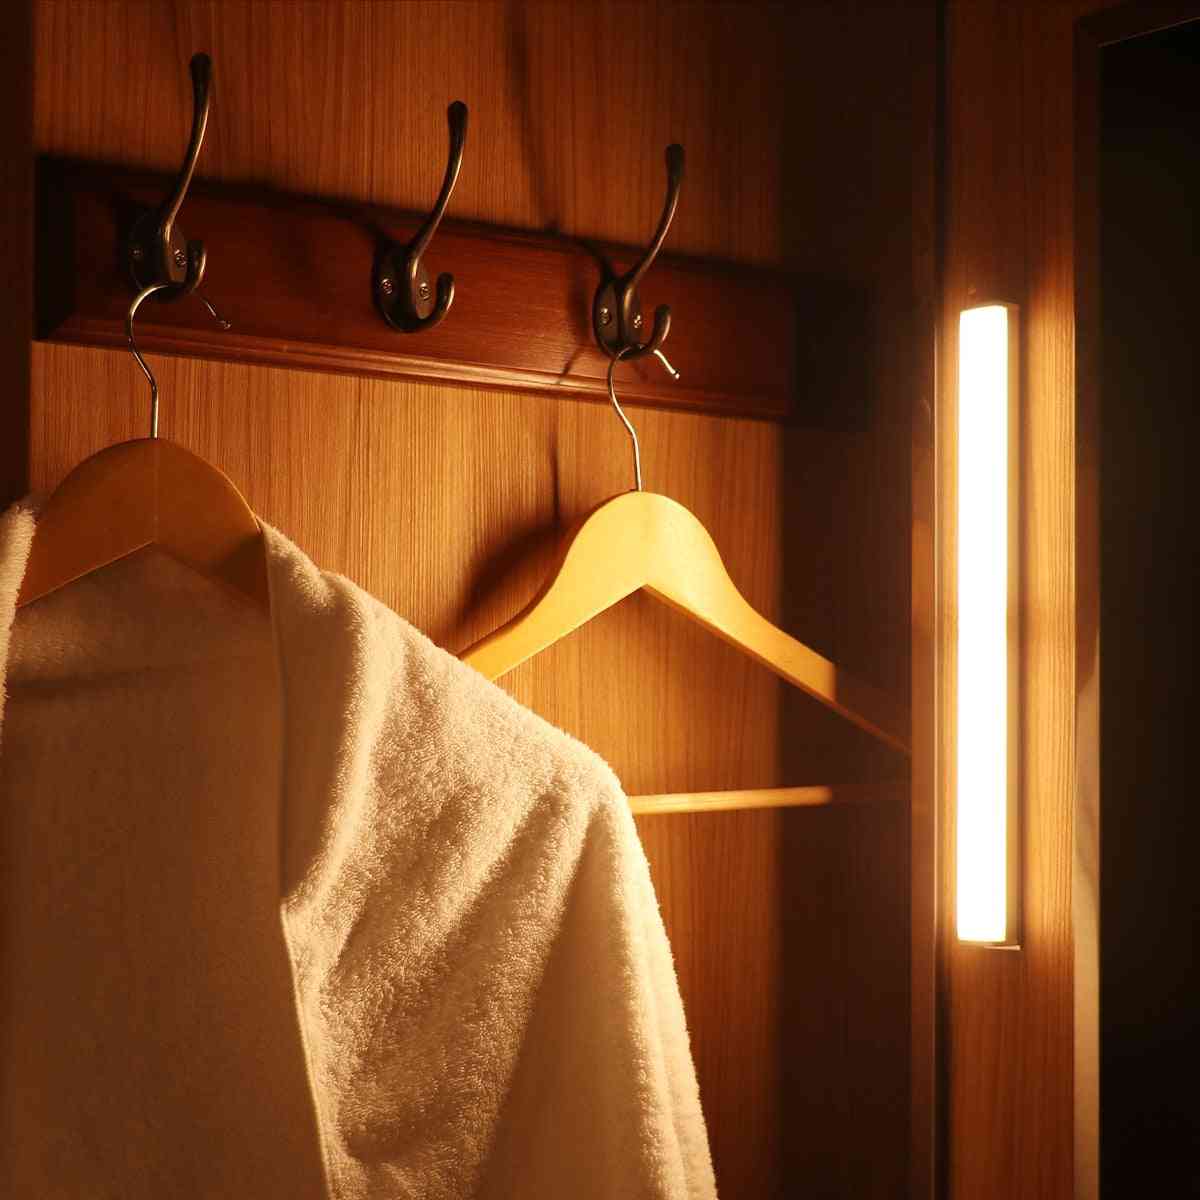 Wireless Lamp Battery Led Light With Motion Sensor Under Cabinet Light Kitchen Lighting For Home Bedroom Closet Colors